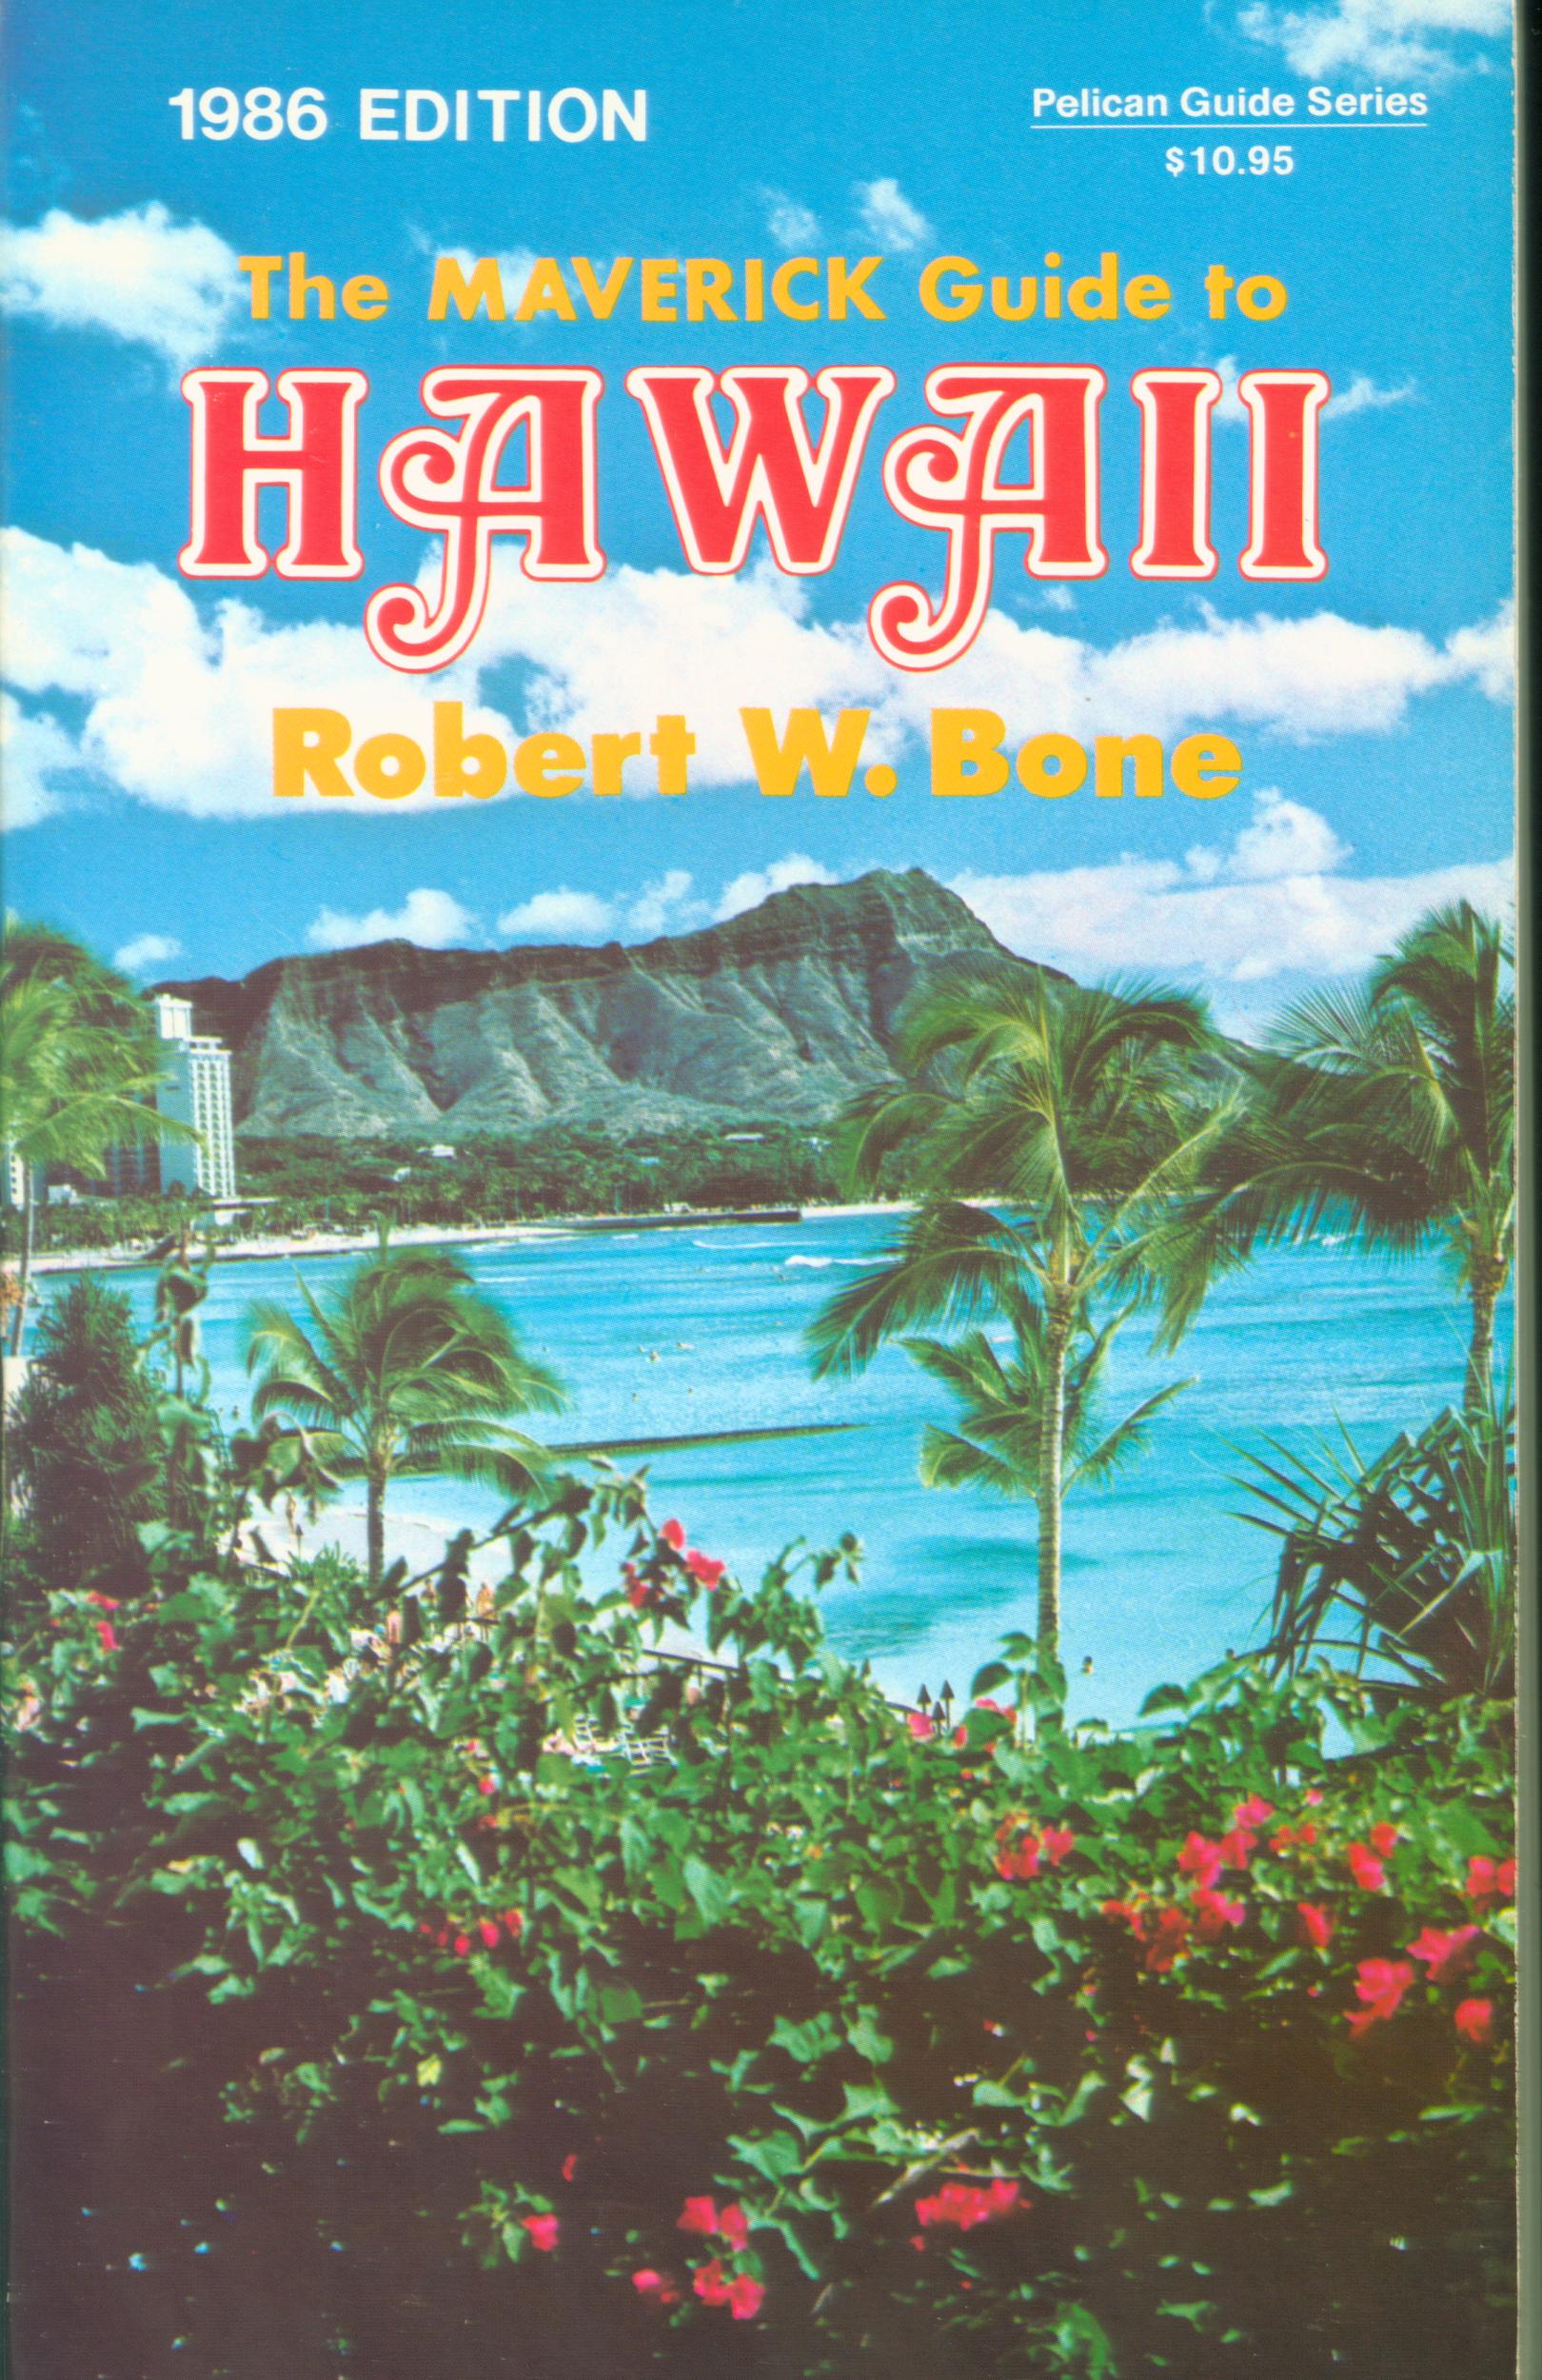 THE MAVERICK GUIDE TO HAWAII.